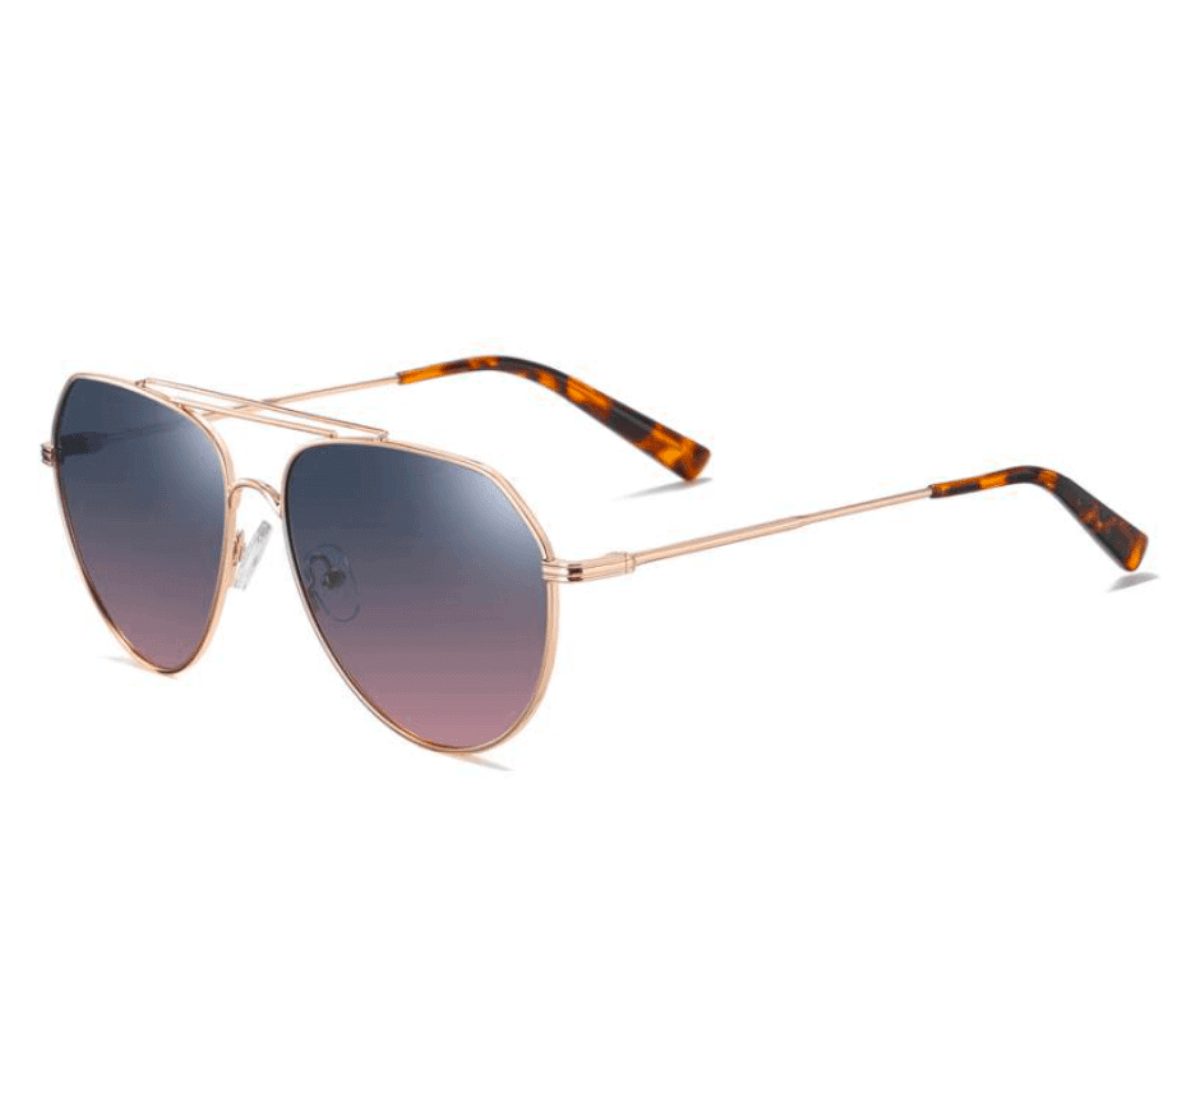 custom made aviator sunglasses women, aviator sunglasses China, custom sunglasses manufacturers China, sunglasses supplier